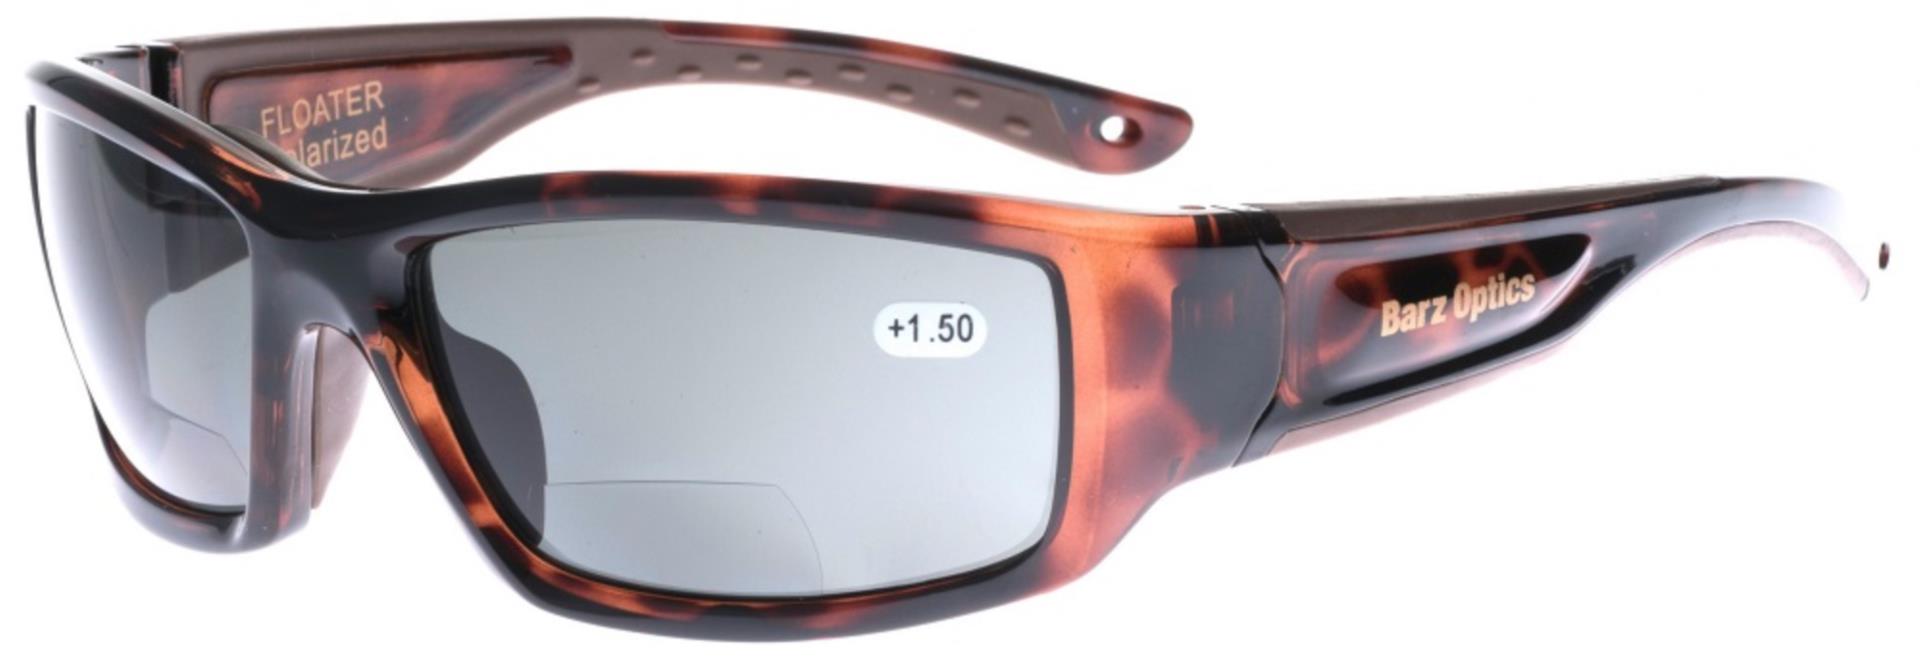 Sonnenbrille Barz Optic grau Lesebrille selbsttönend+2,5